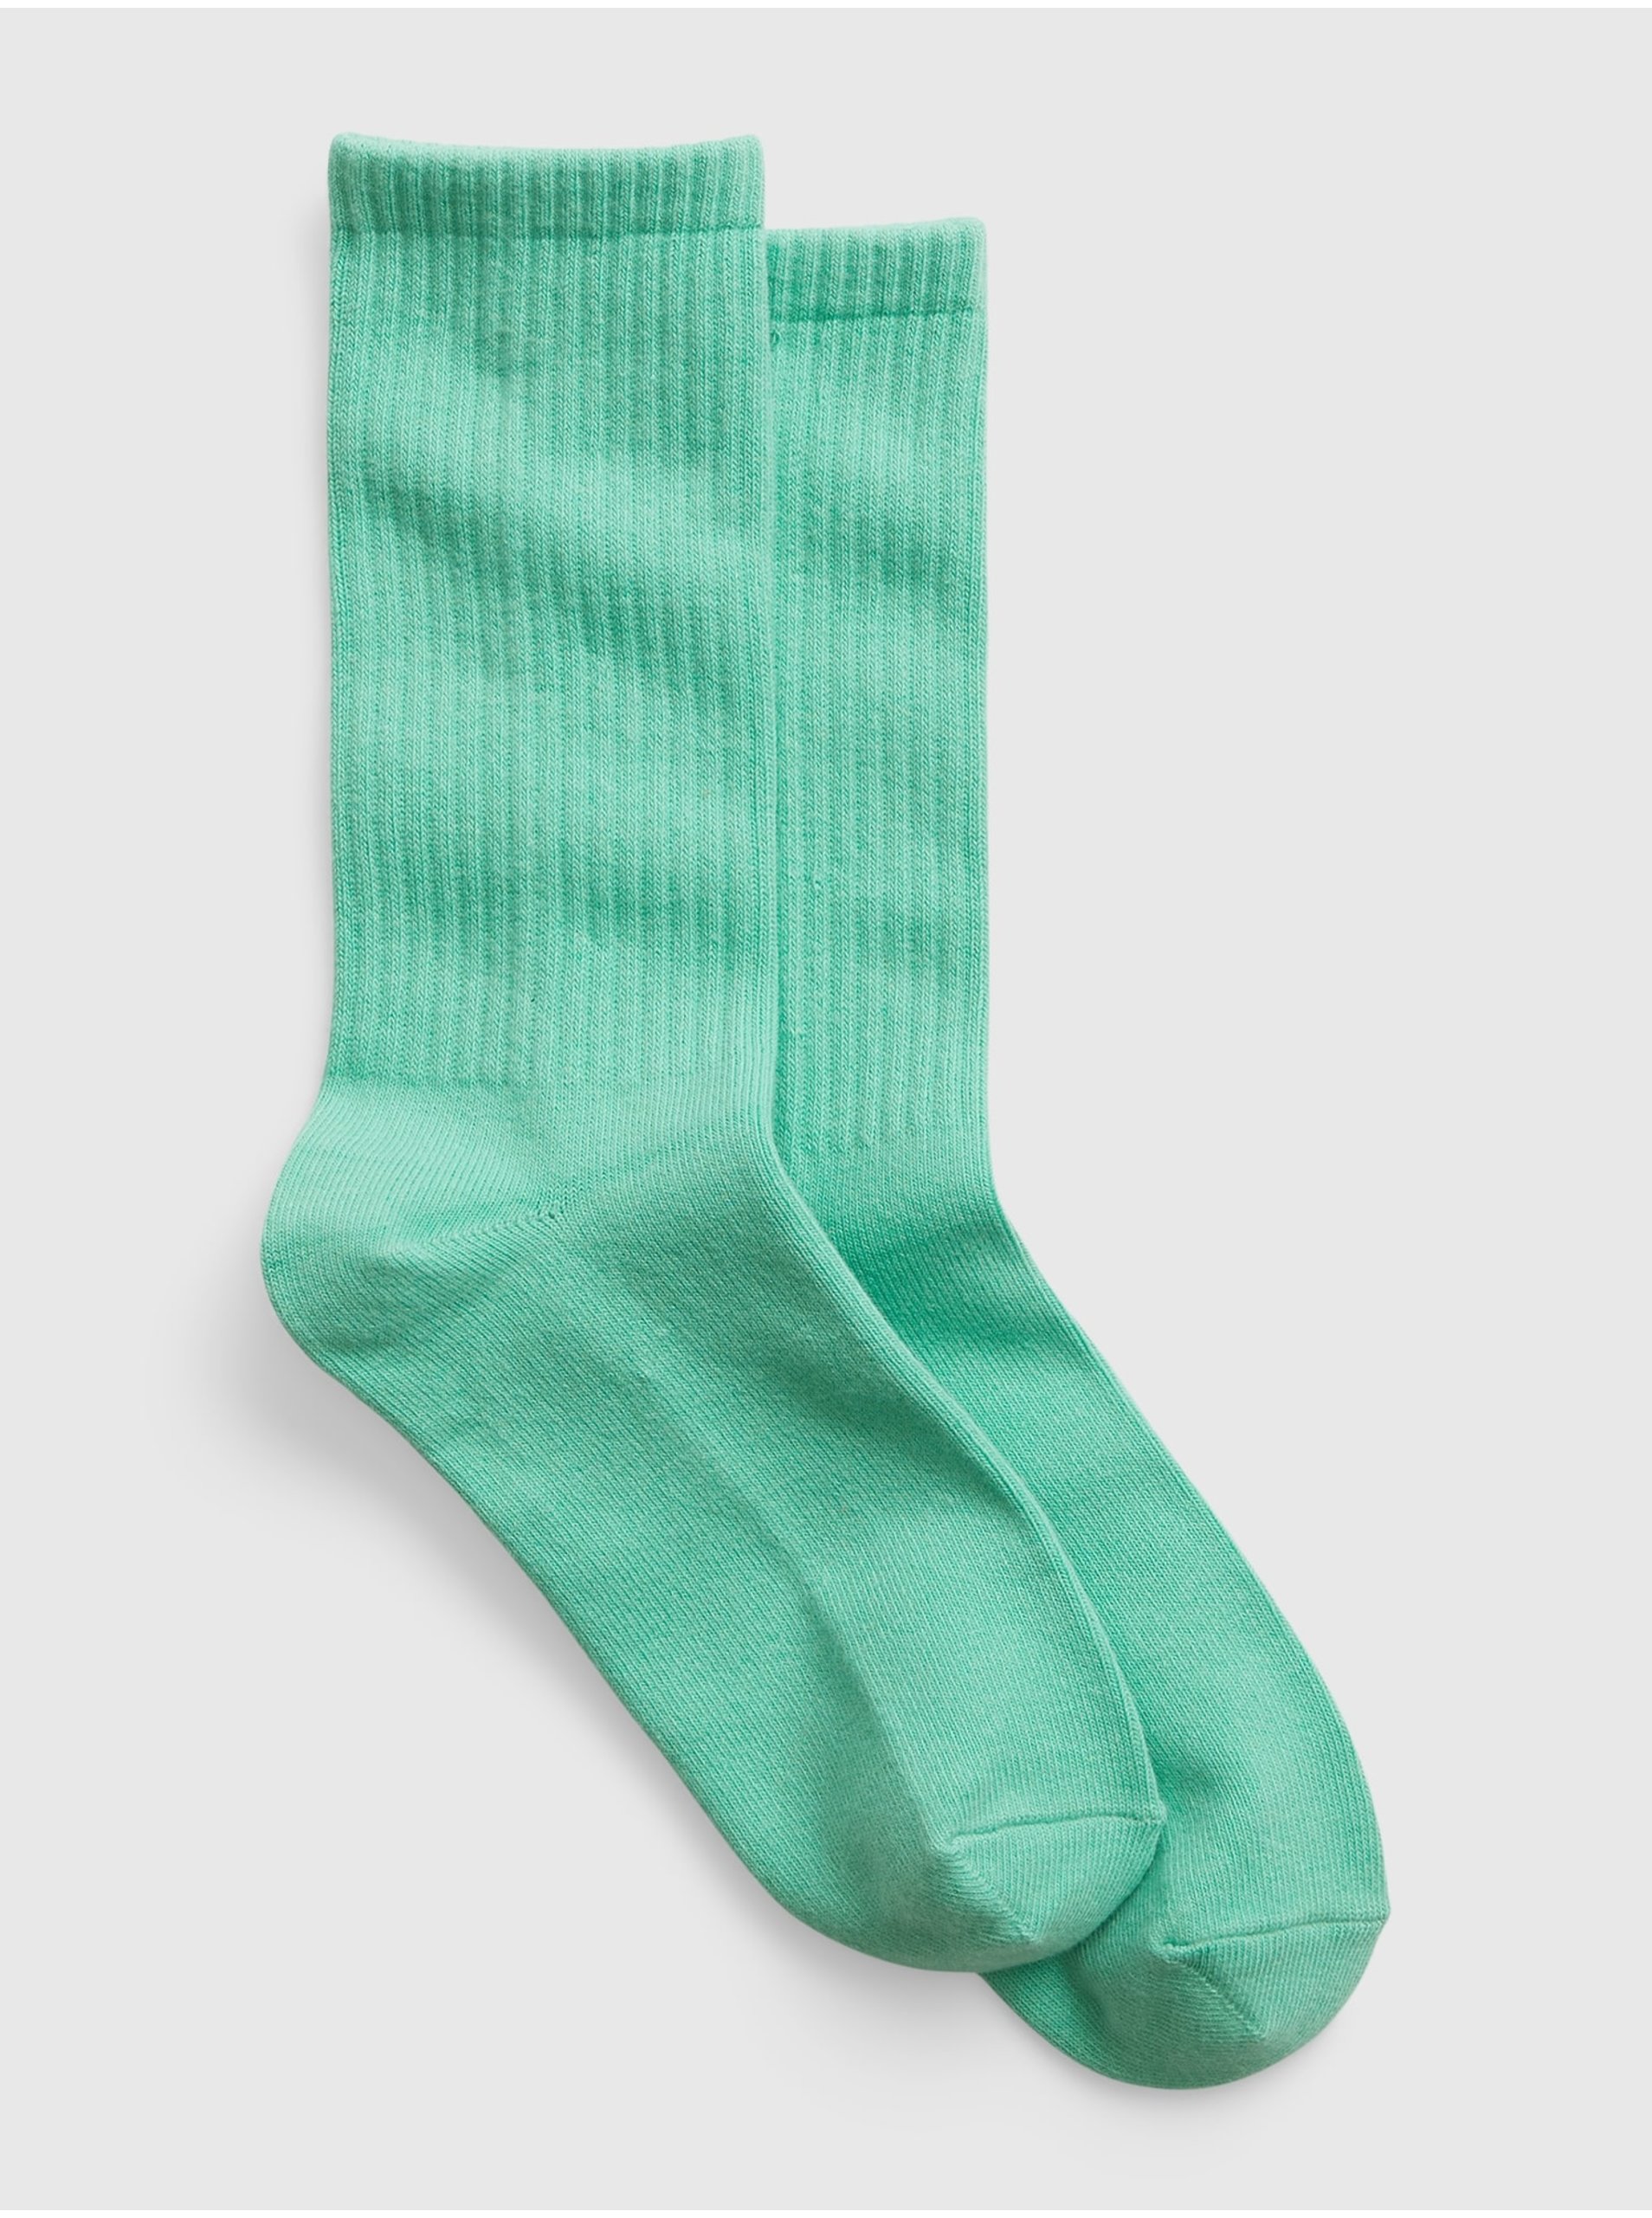 Lacno Zelené pánske ponožky GAP